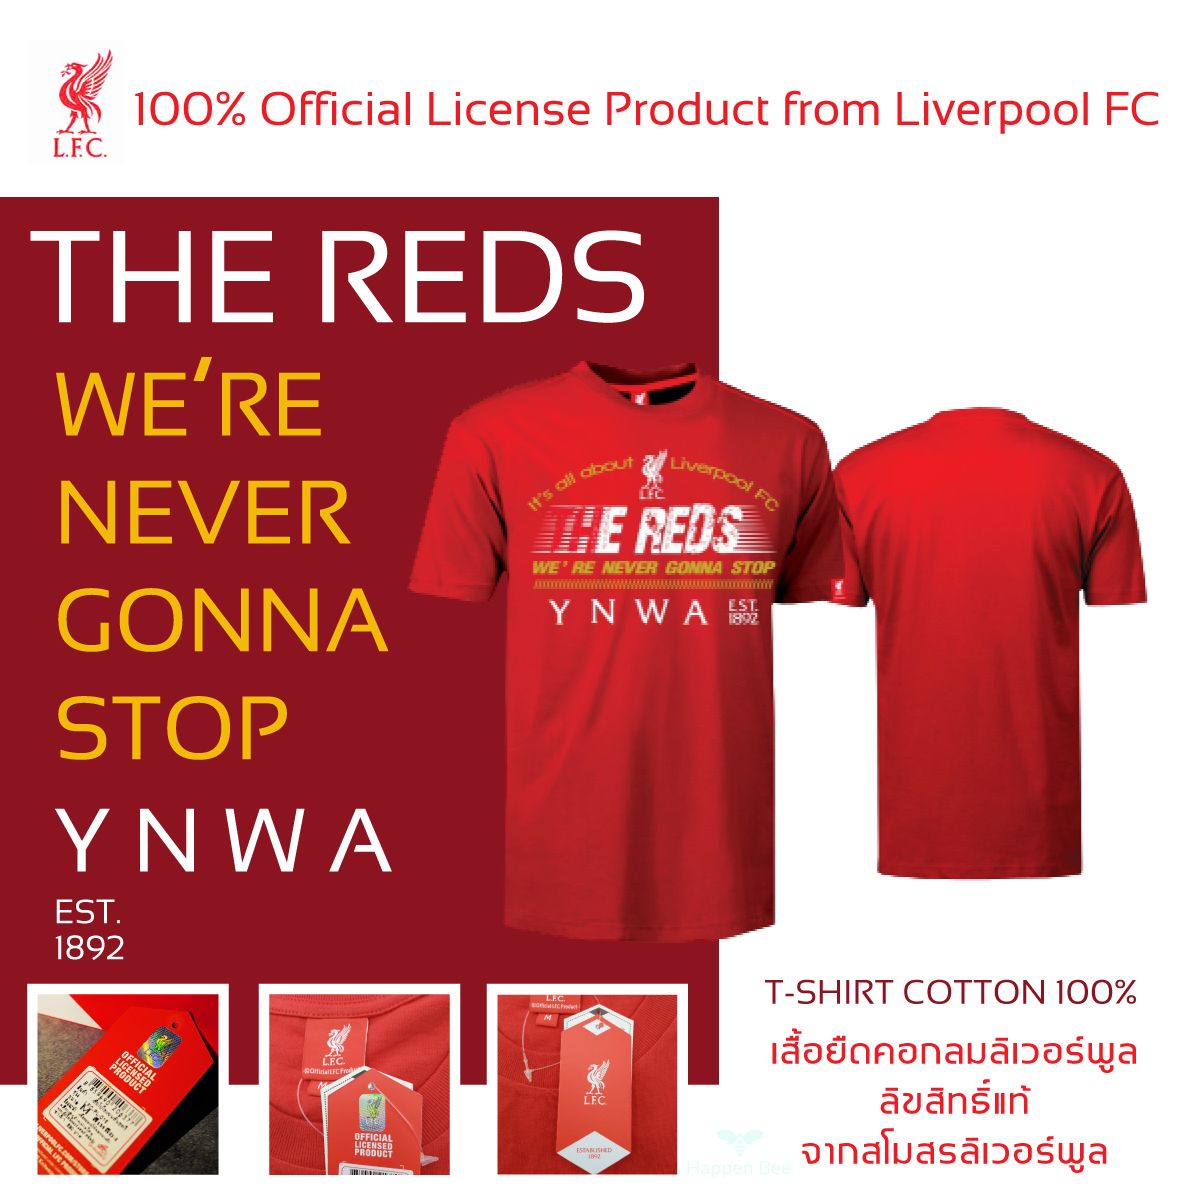 Liverpool : LFC Official Licence Product : THE REDS We're Never Gonna Stop เสื้อลิเวอร์พูล เสื้อยืดคอกลมลิเวอร์พูล ลิขสิทธิ์แท้จากสโมสรลิเวอร์พูล Liverpool T070 สีแดงและดำ